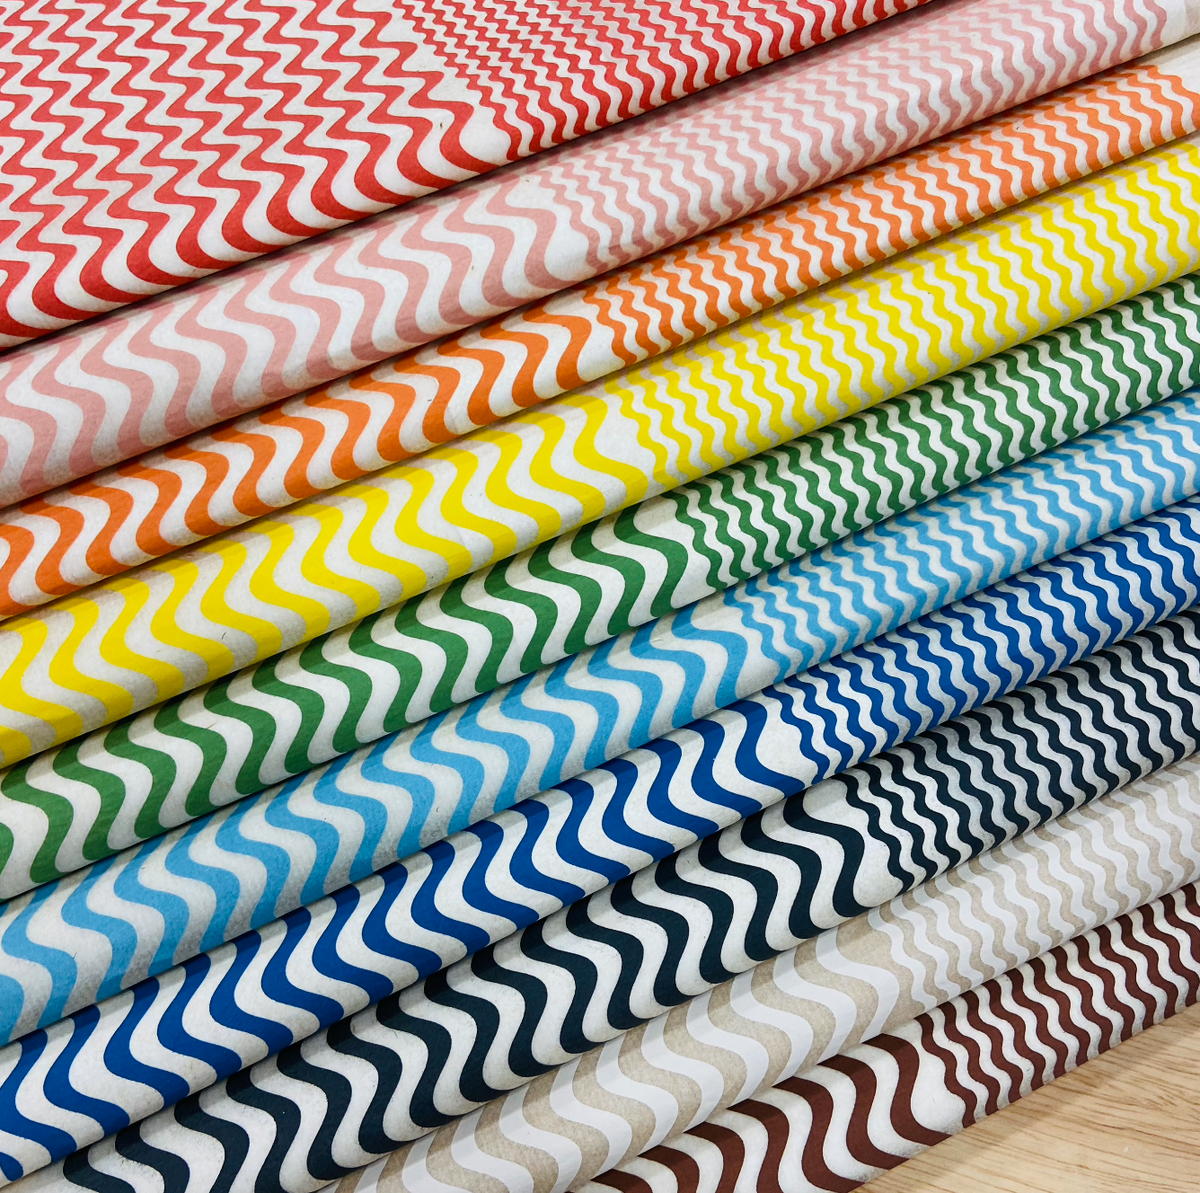 Wavy Lines - Underglaze Transfer Sheet - You Choose Color